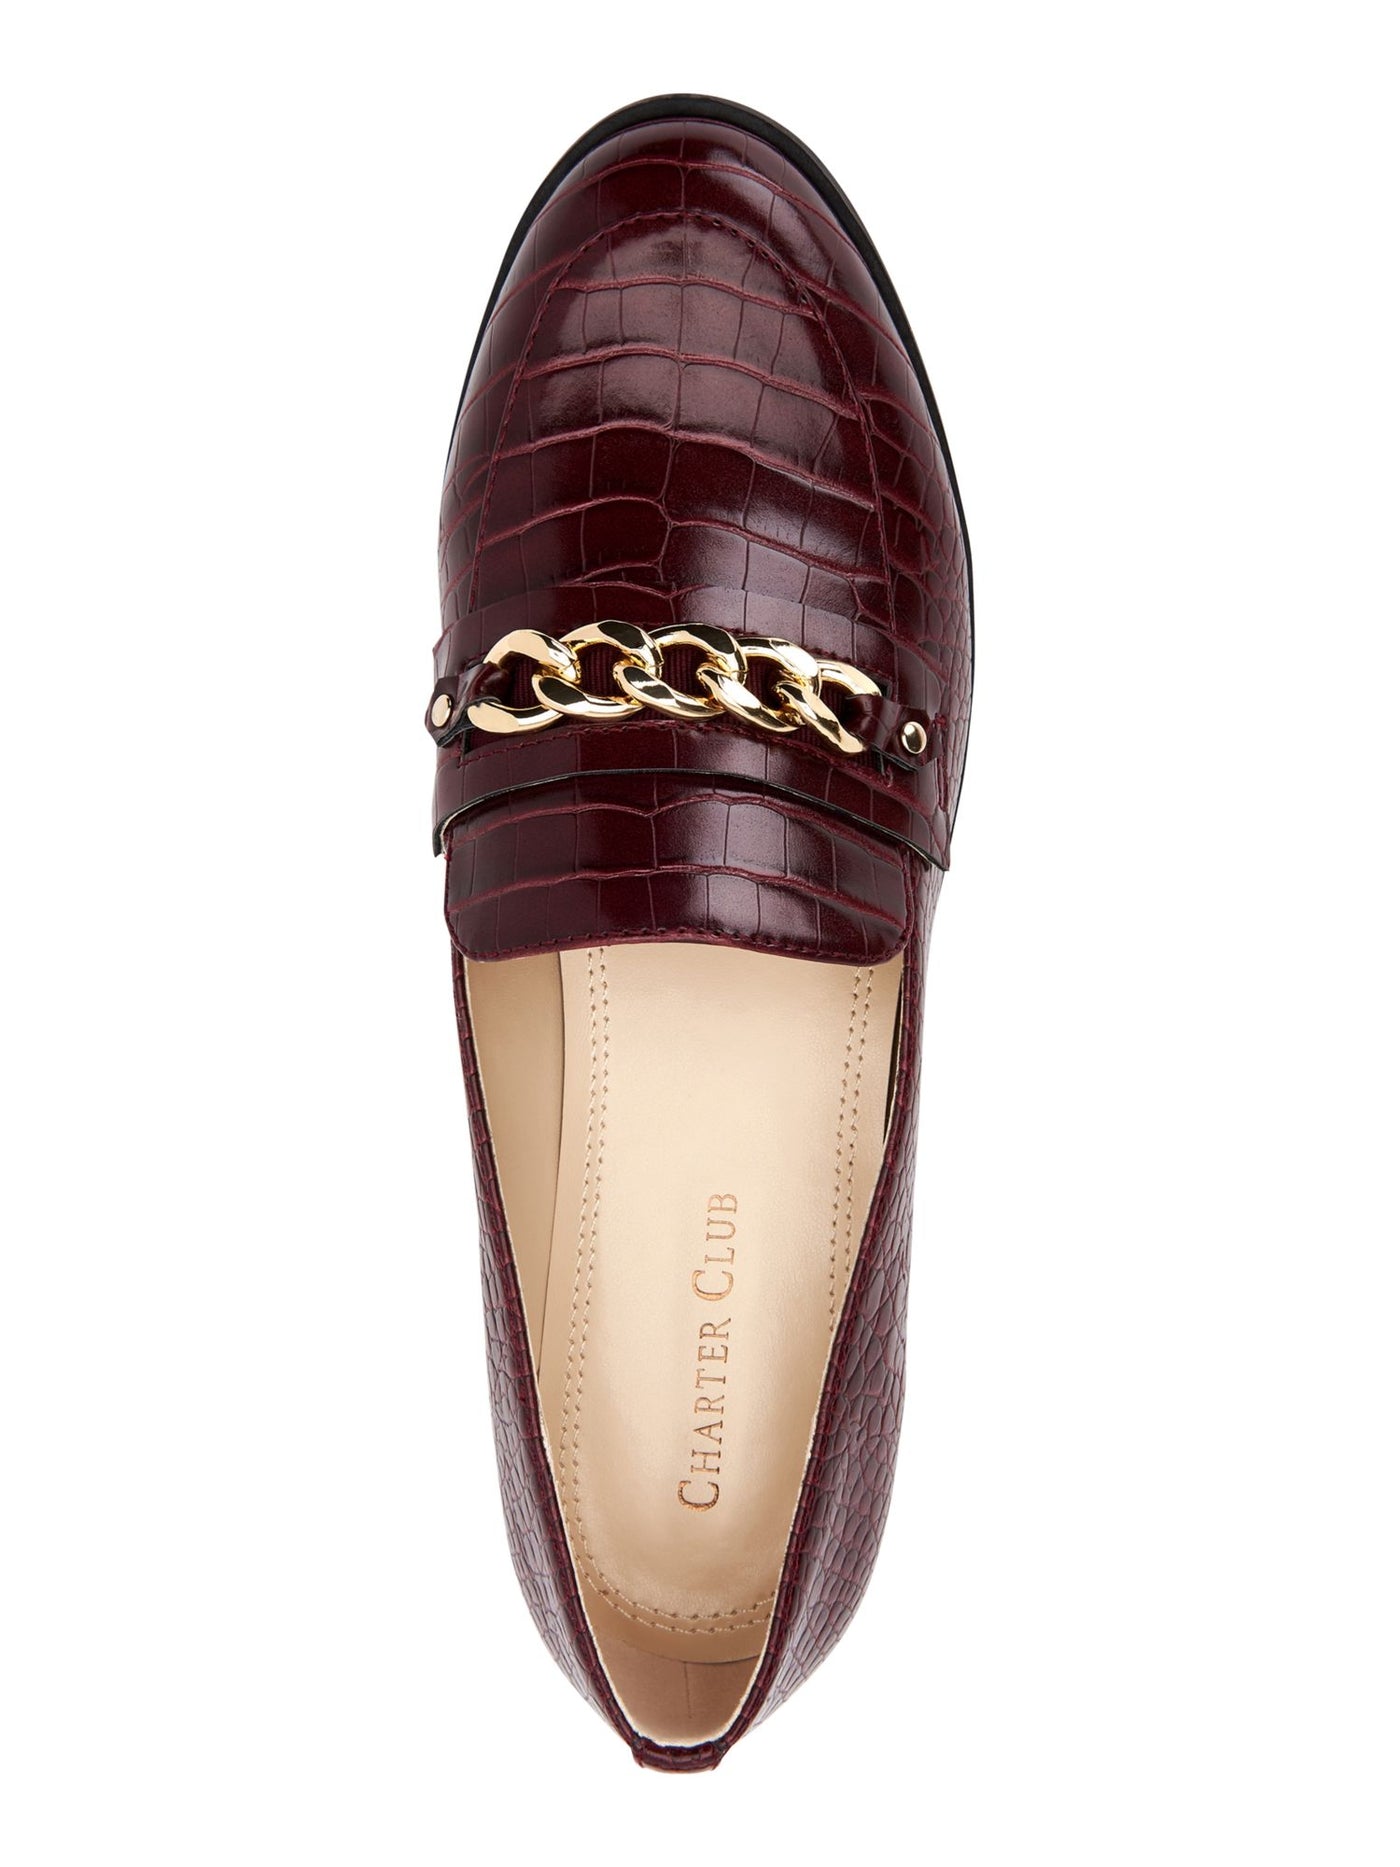 CHARTER CLUB Womens Burgundy Crocodile Chain Detail Padded Kattelle Almond Toe Block Heel Slip On Loafers Shoes 10 M